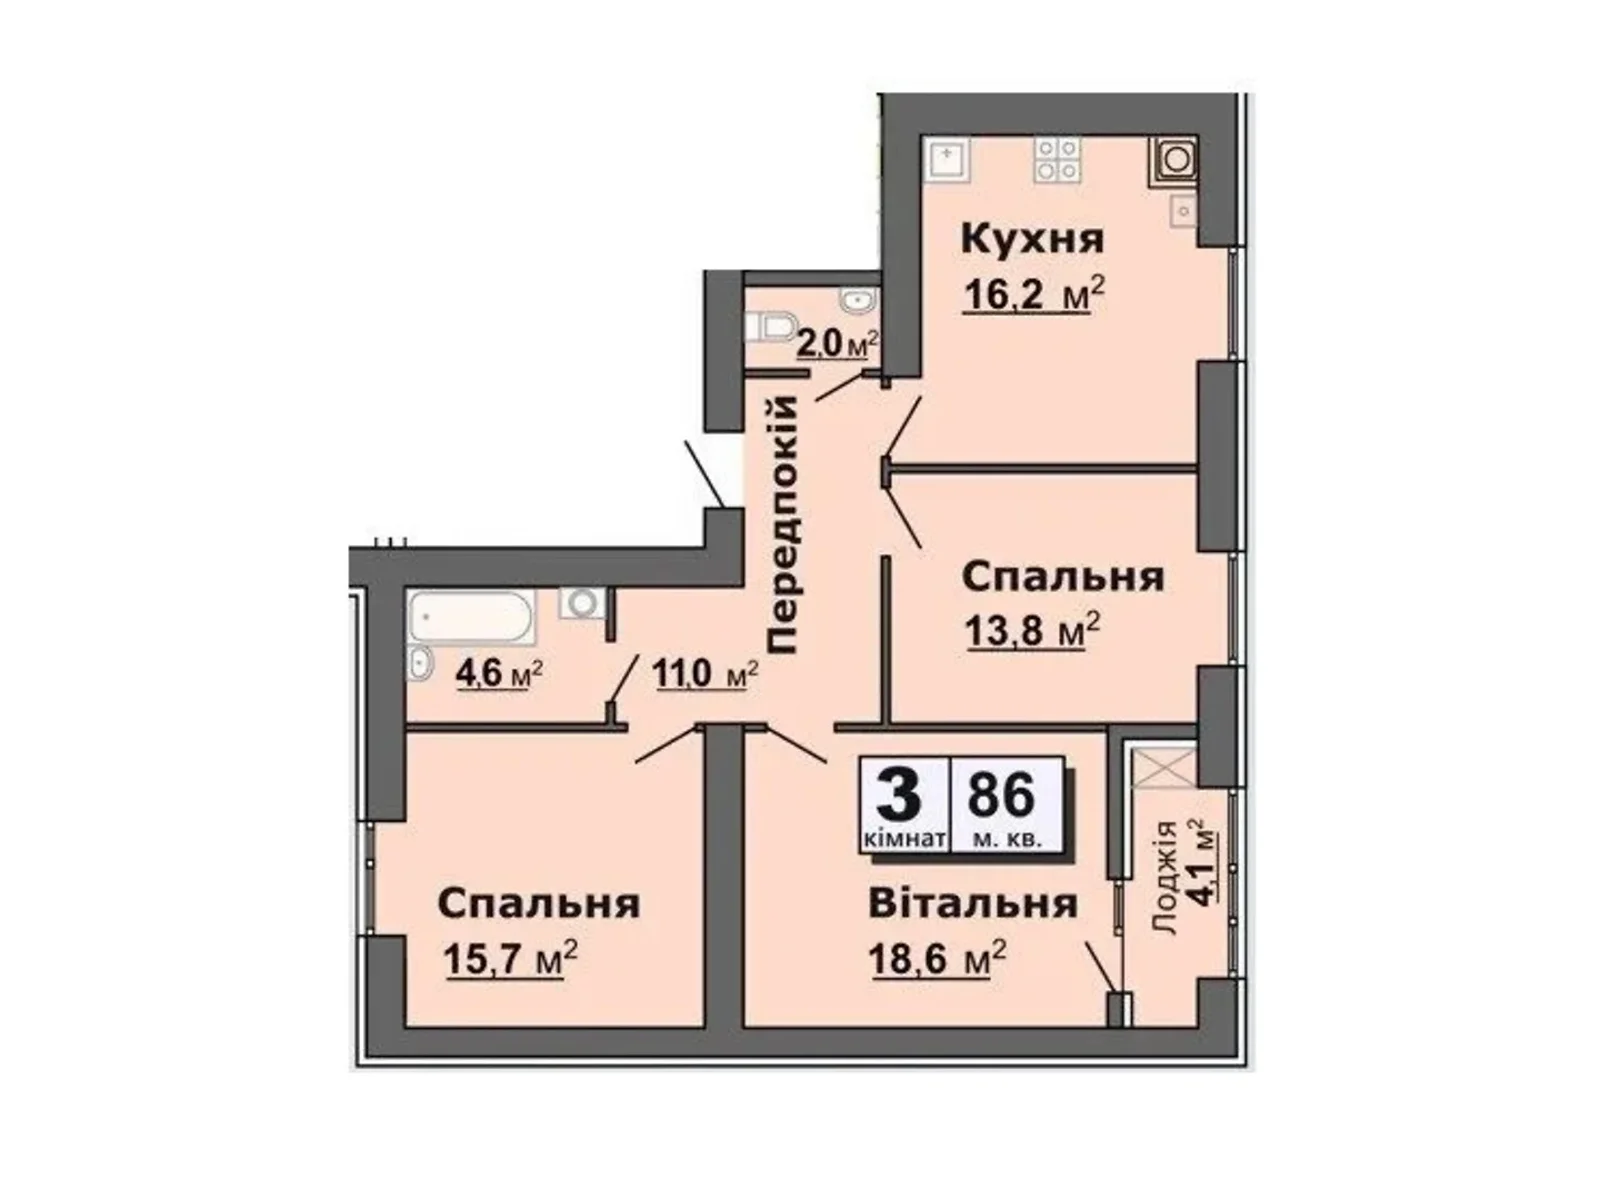 3-кімнатна квартира 86 кв. м у Луцьку, цена: 73283 $